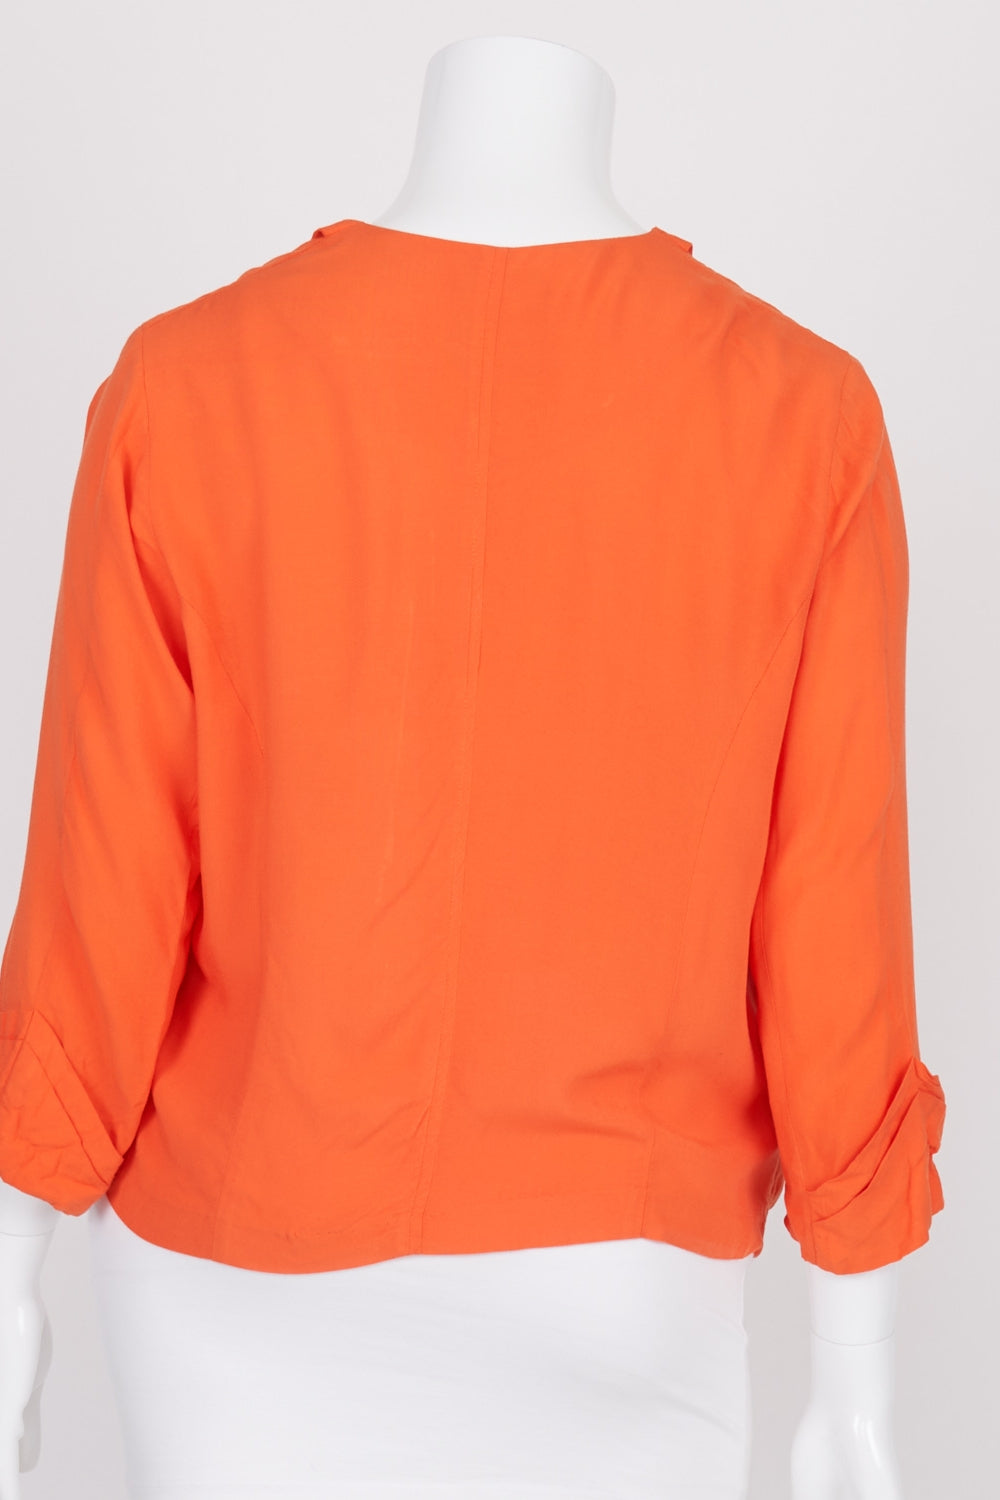 Jeanswest Orange Open Front Jacket 14